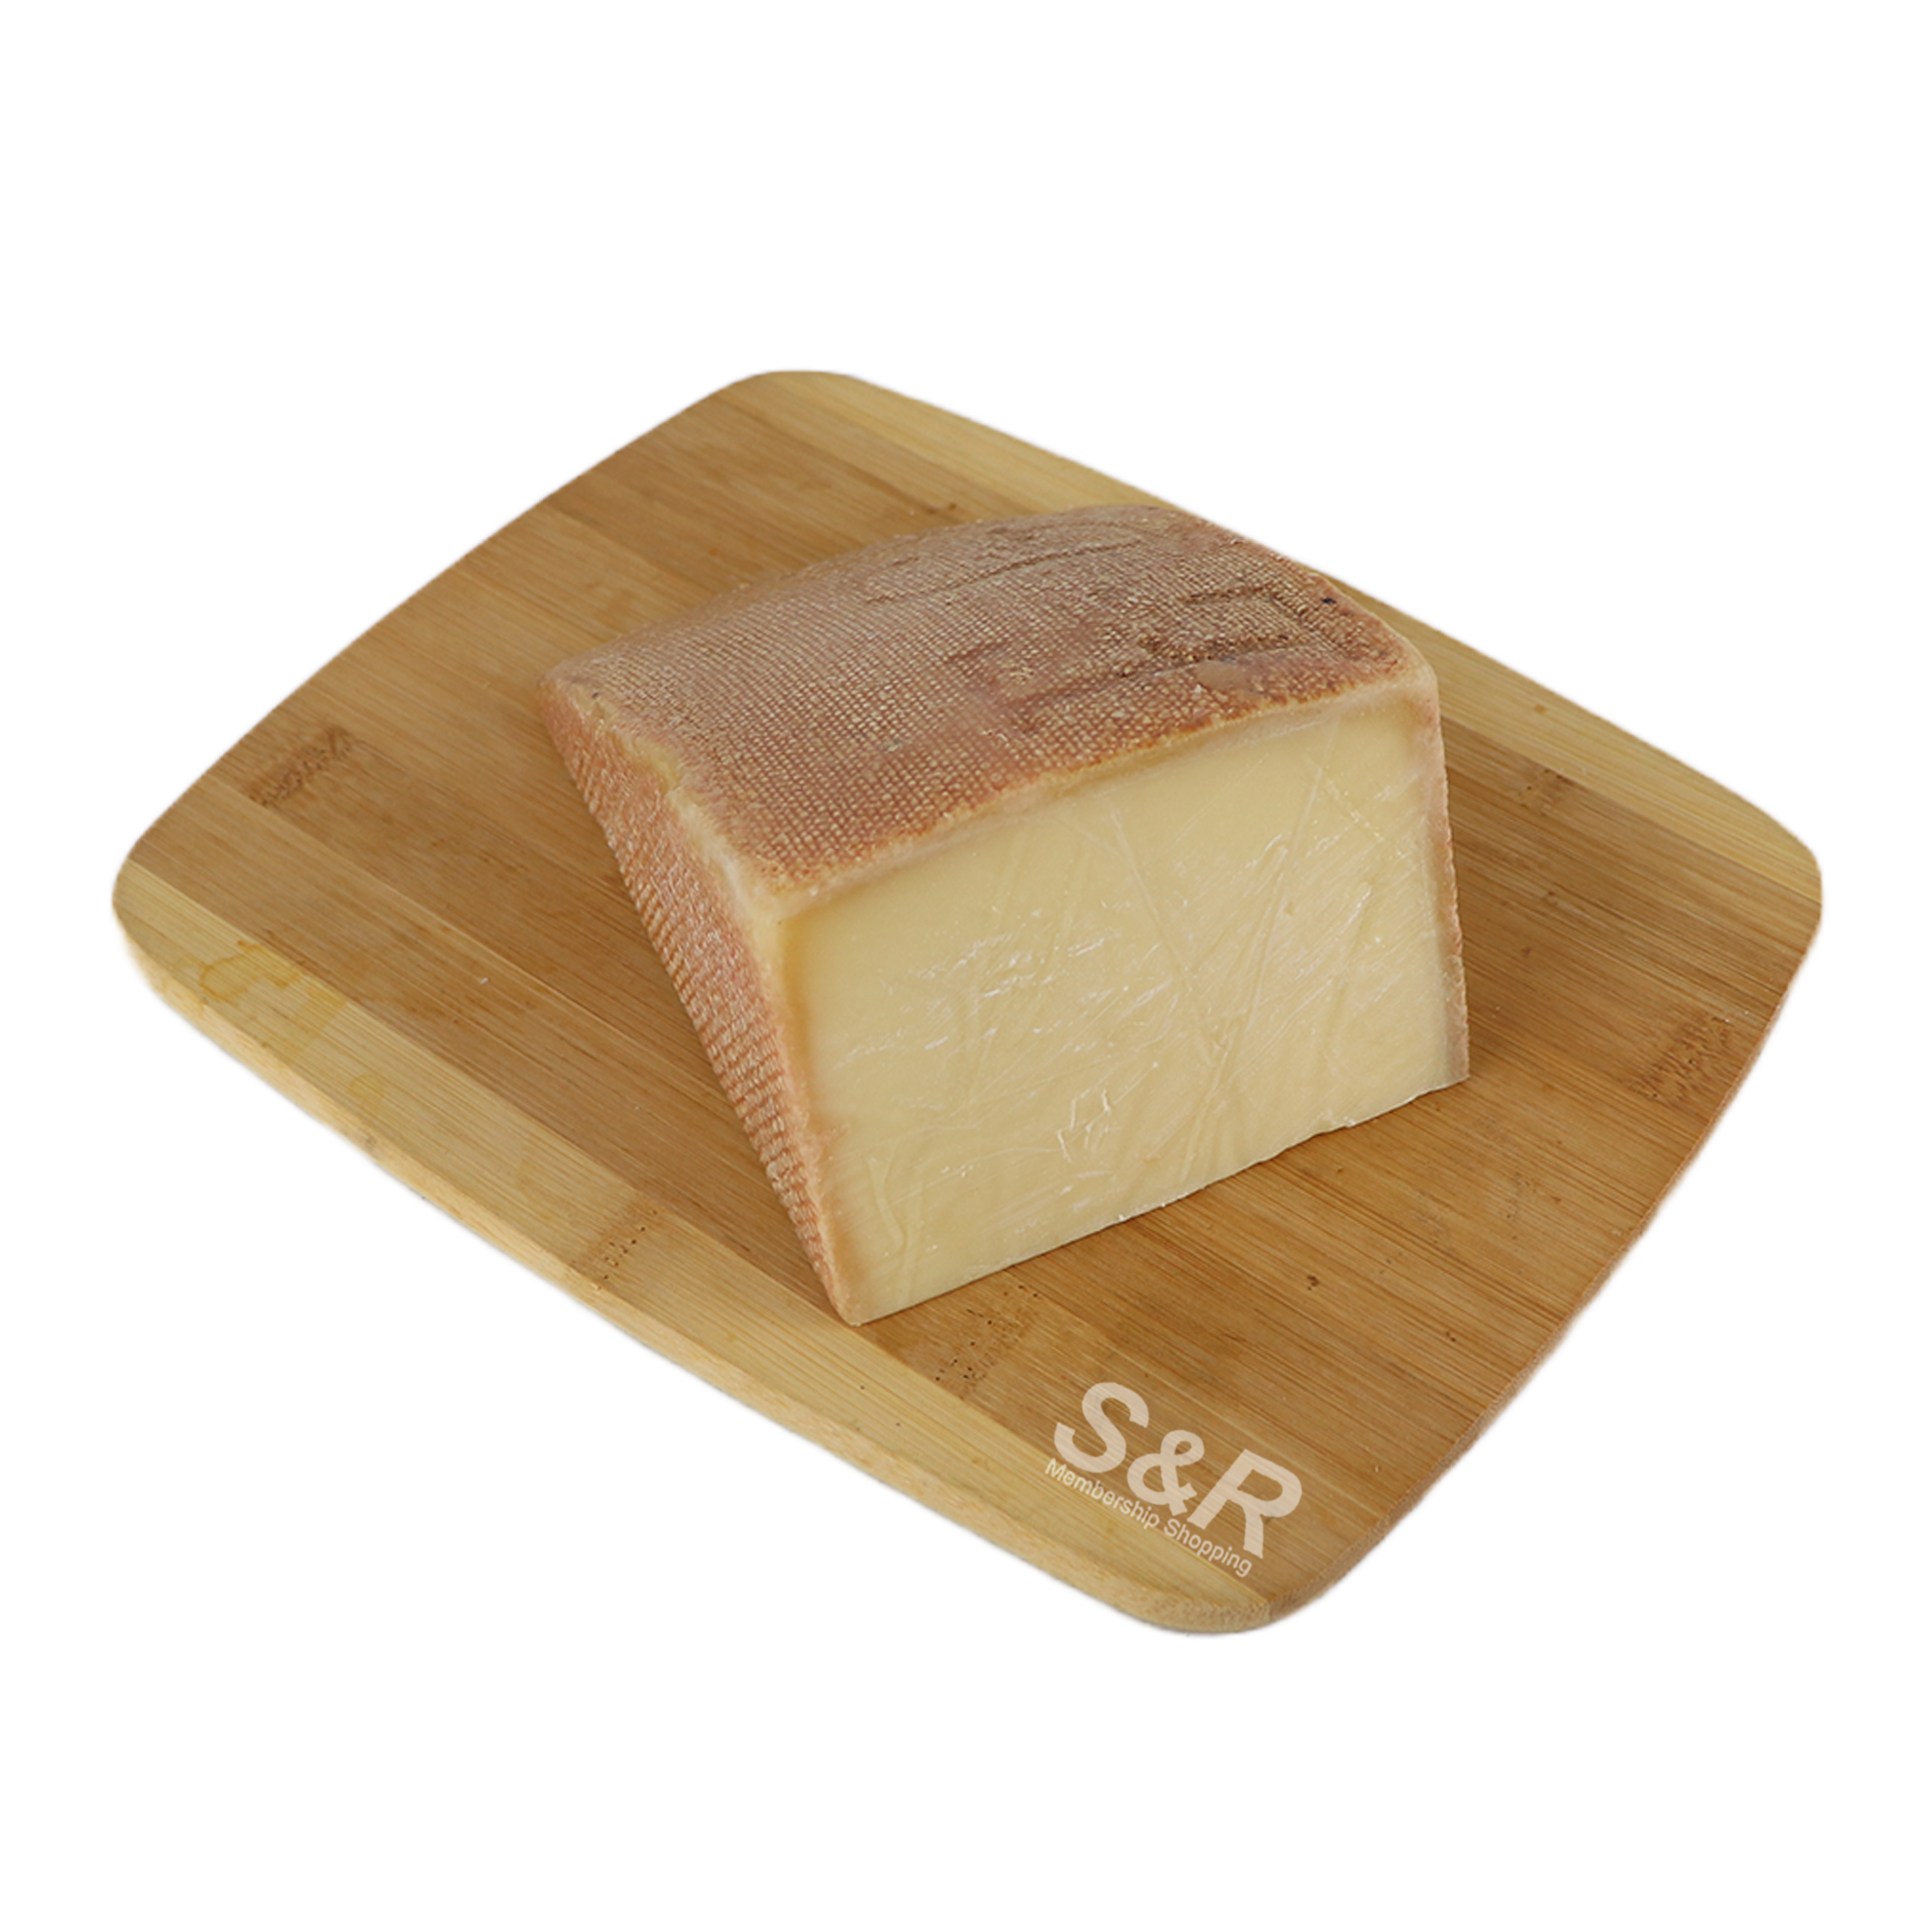 S&R Gruyere Swiss Cheese approx. 750g